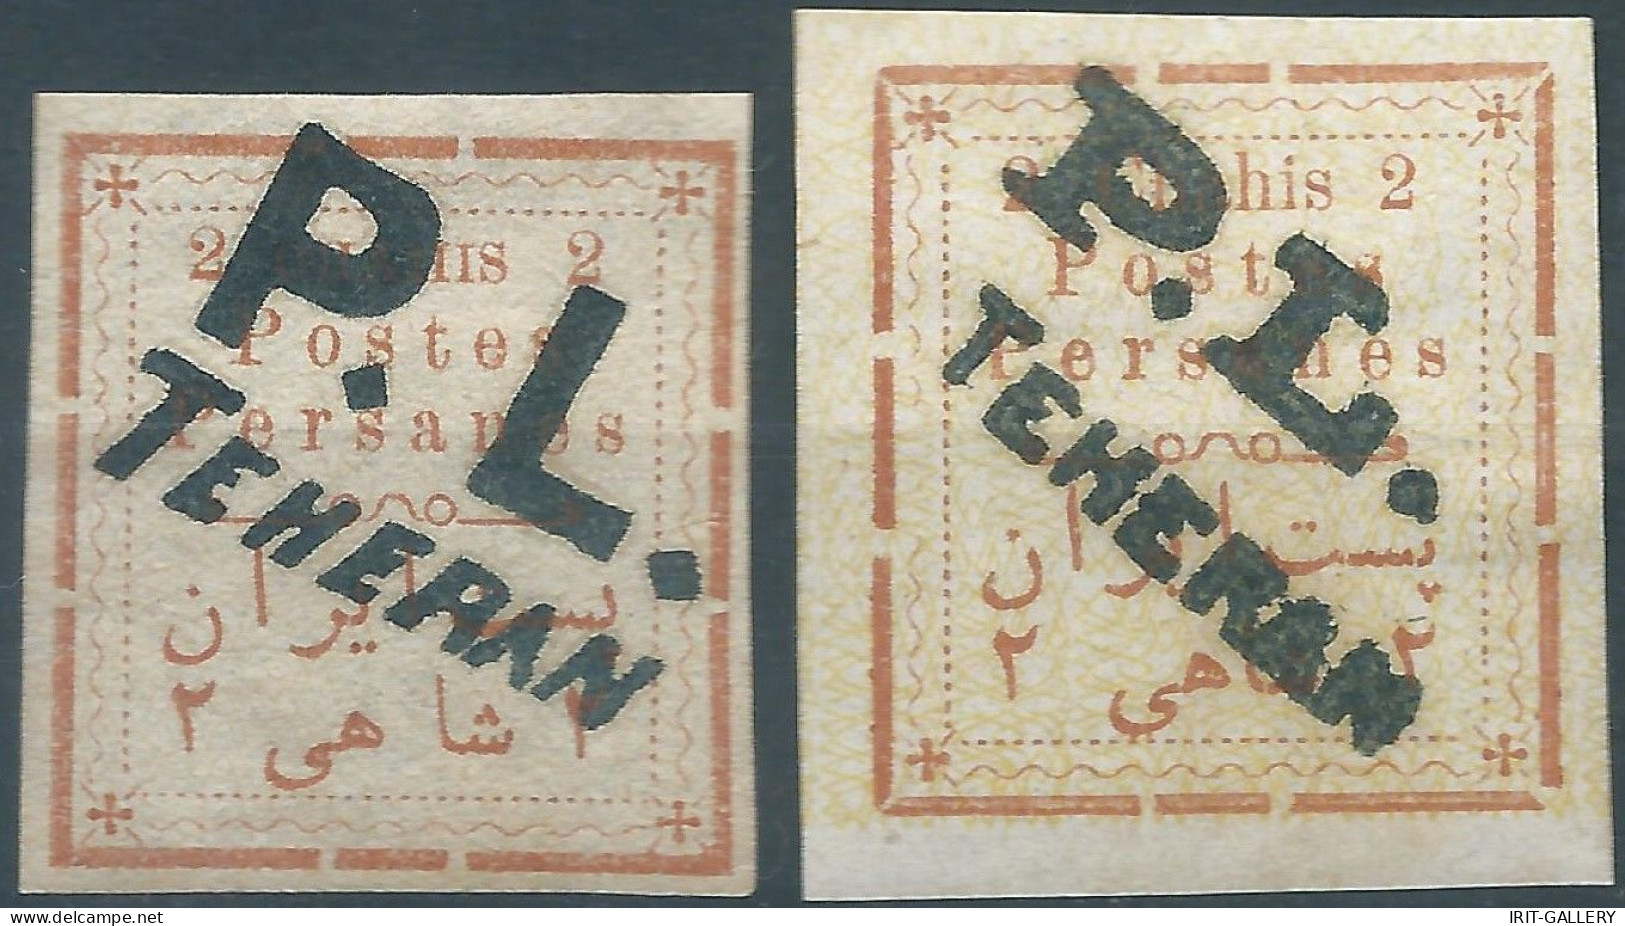 PERSIA PERSE IRAN,1902 The Local Post Issue For Tehran Black Handstamp,Overprint P.L.TEHERAN On 2 Chahis,TypeI&II,Mint - Irán